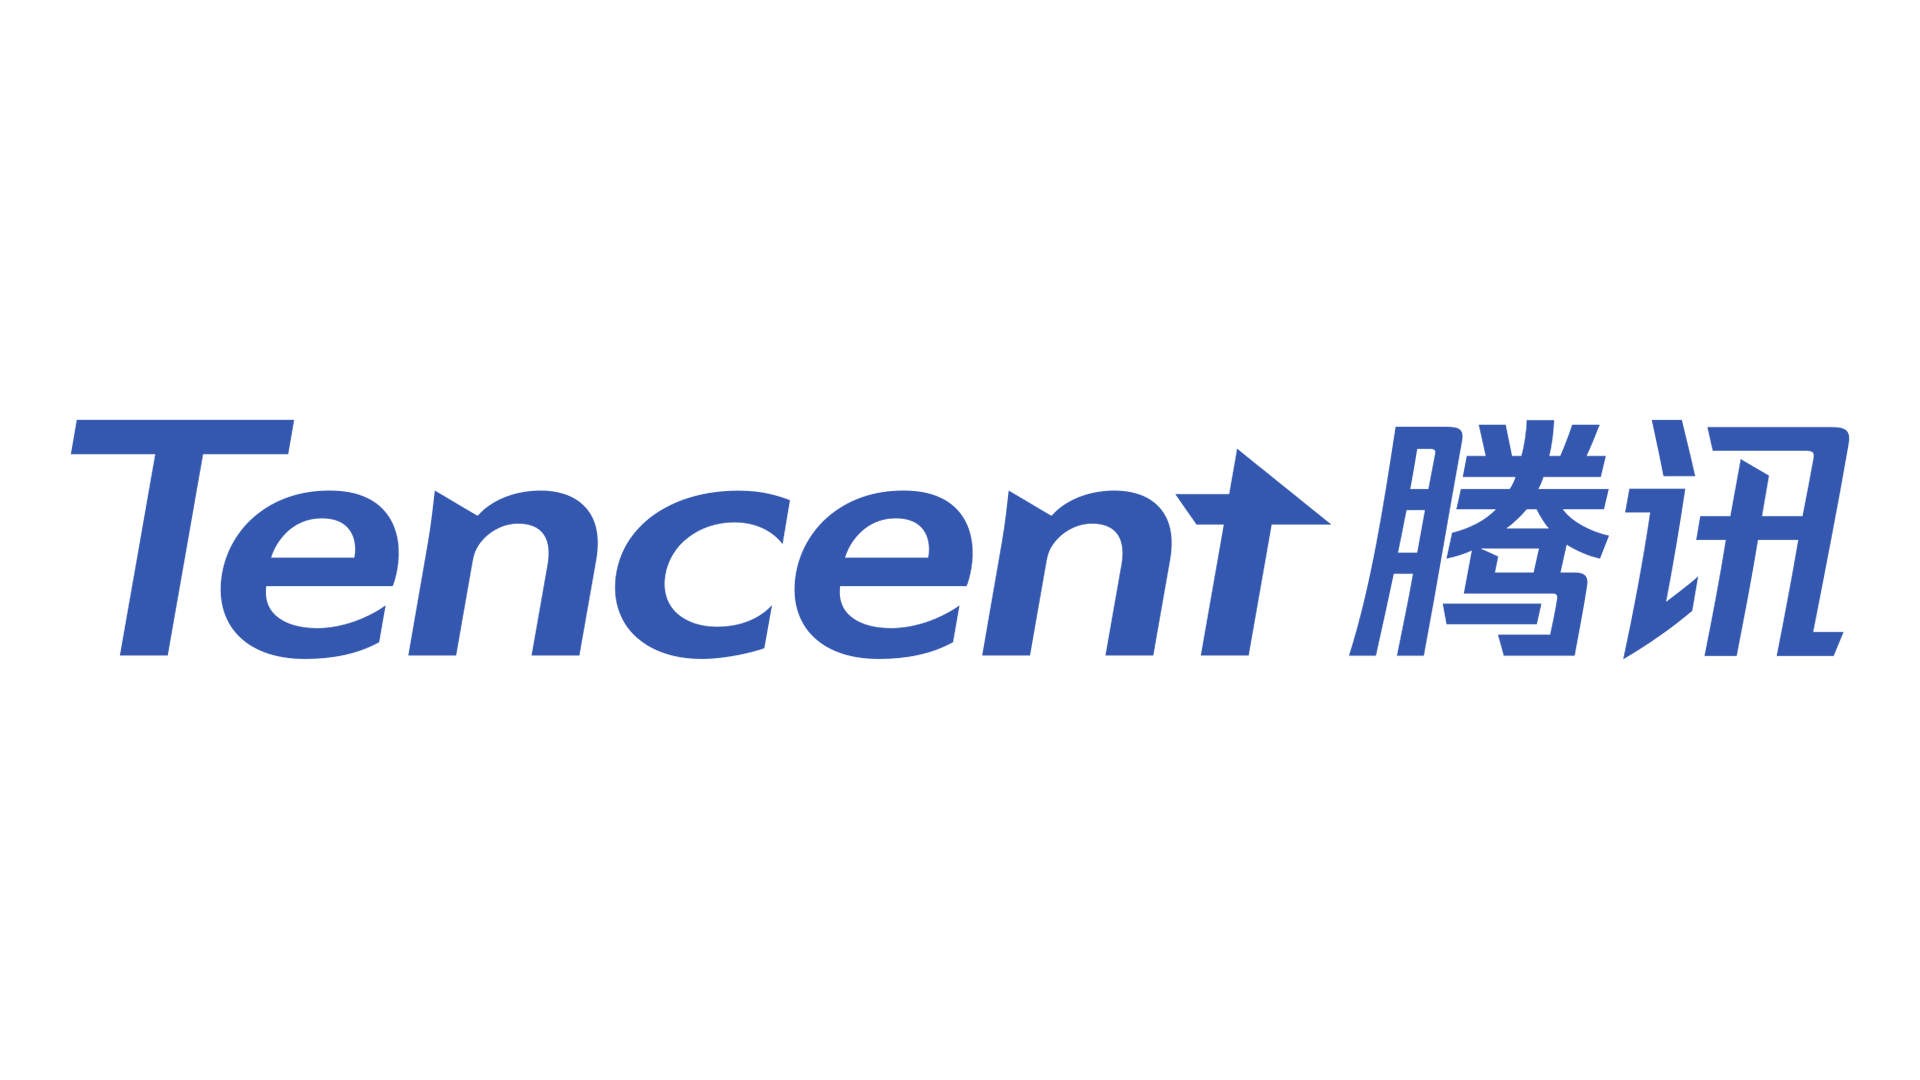 Proksi untuk tencent.com